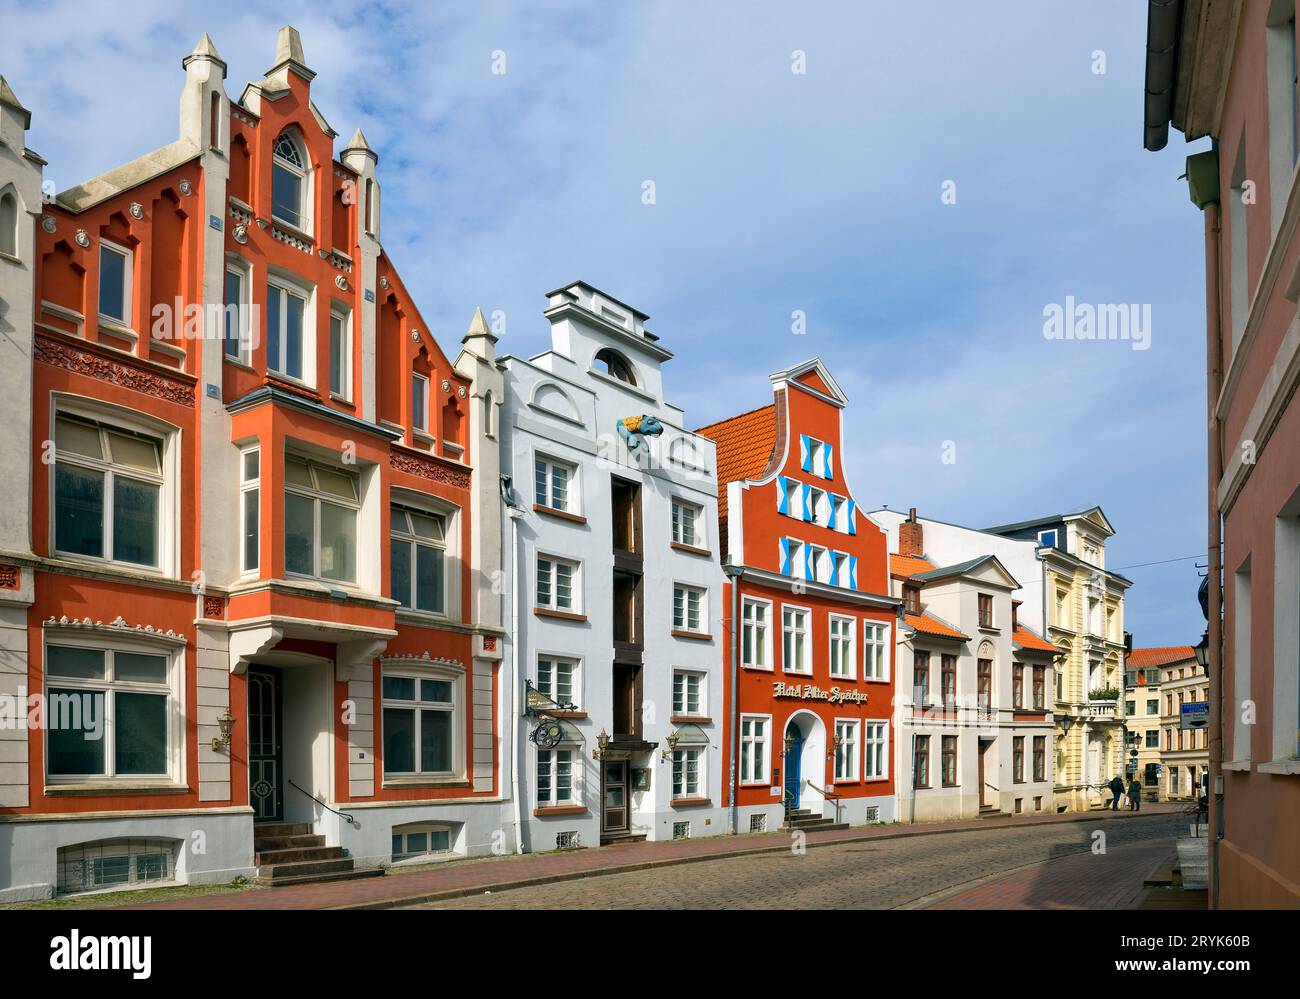 Facciate in legno, città anseatica di Wismar, Meclemburgo-Pomerania Occidentale, Germania, Europa Foto Stock